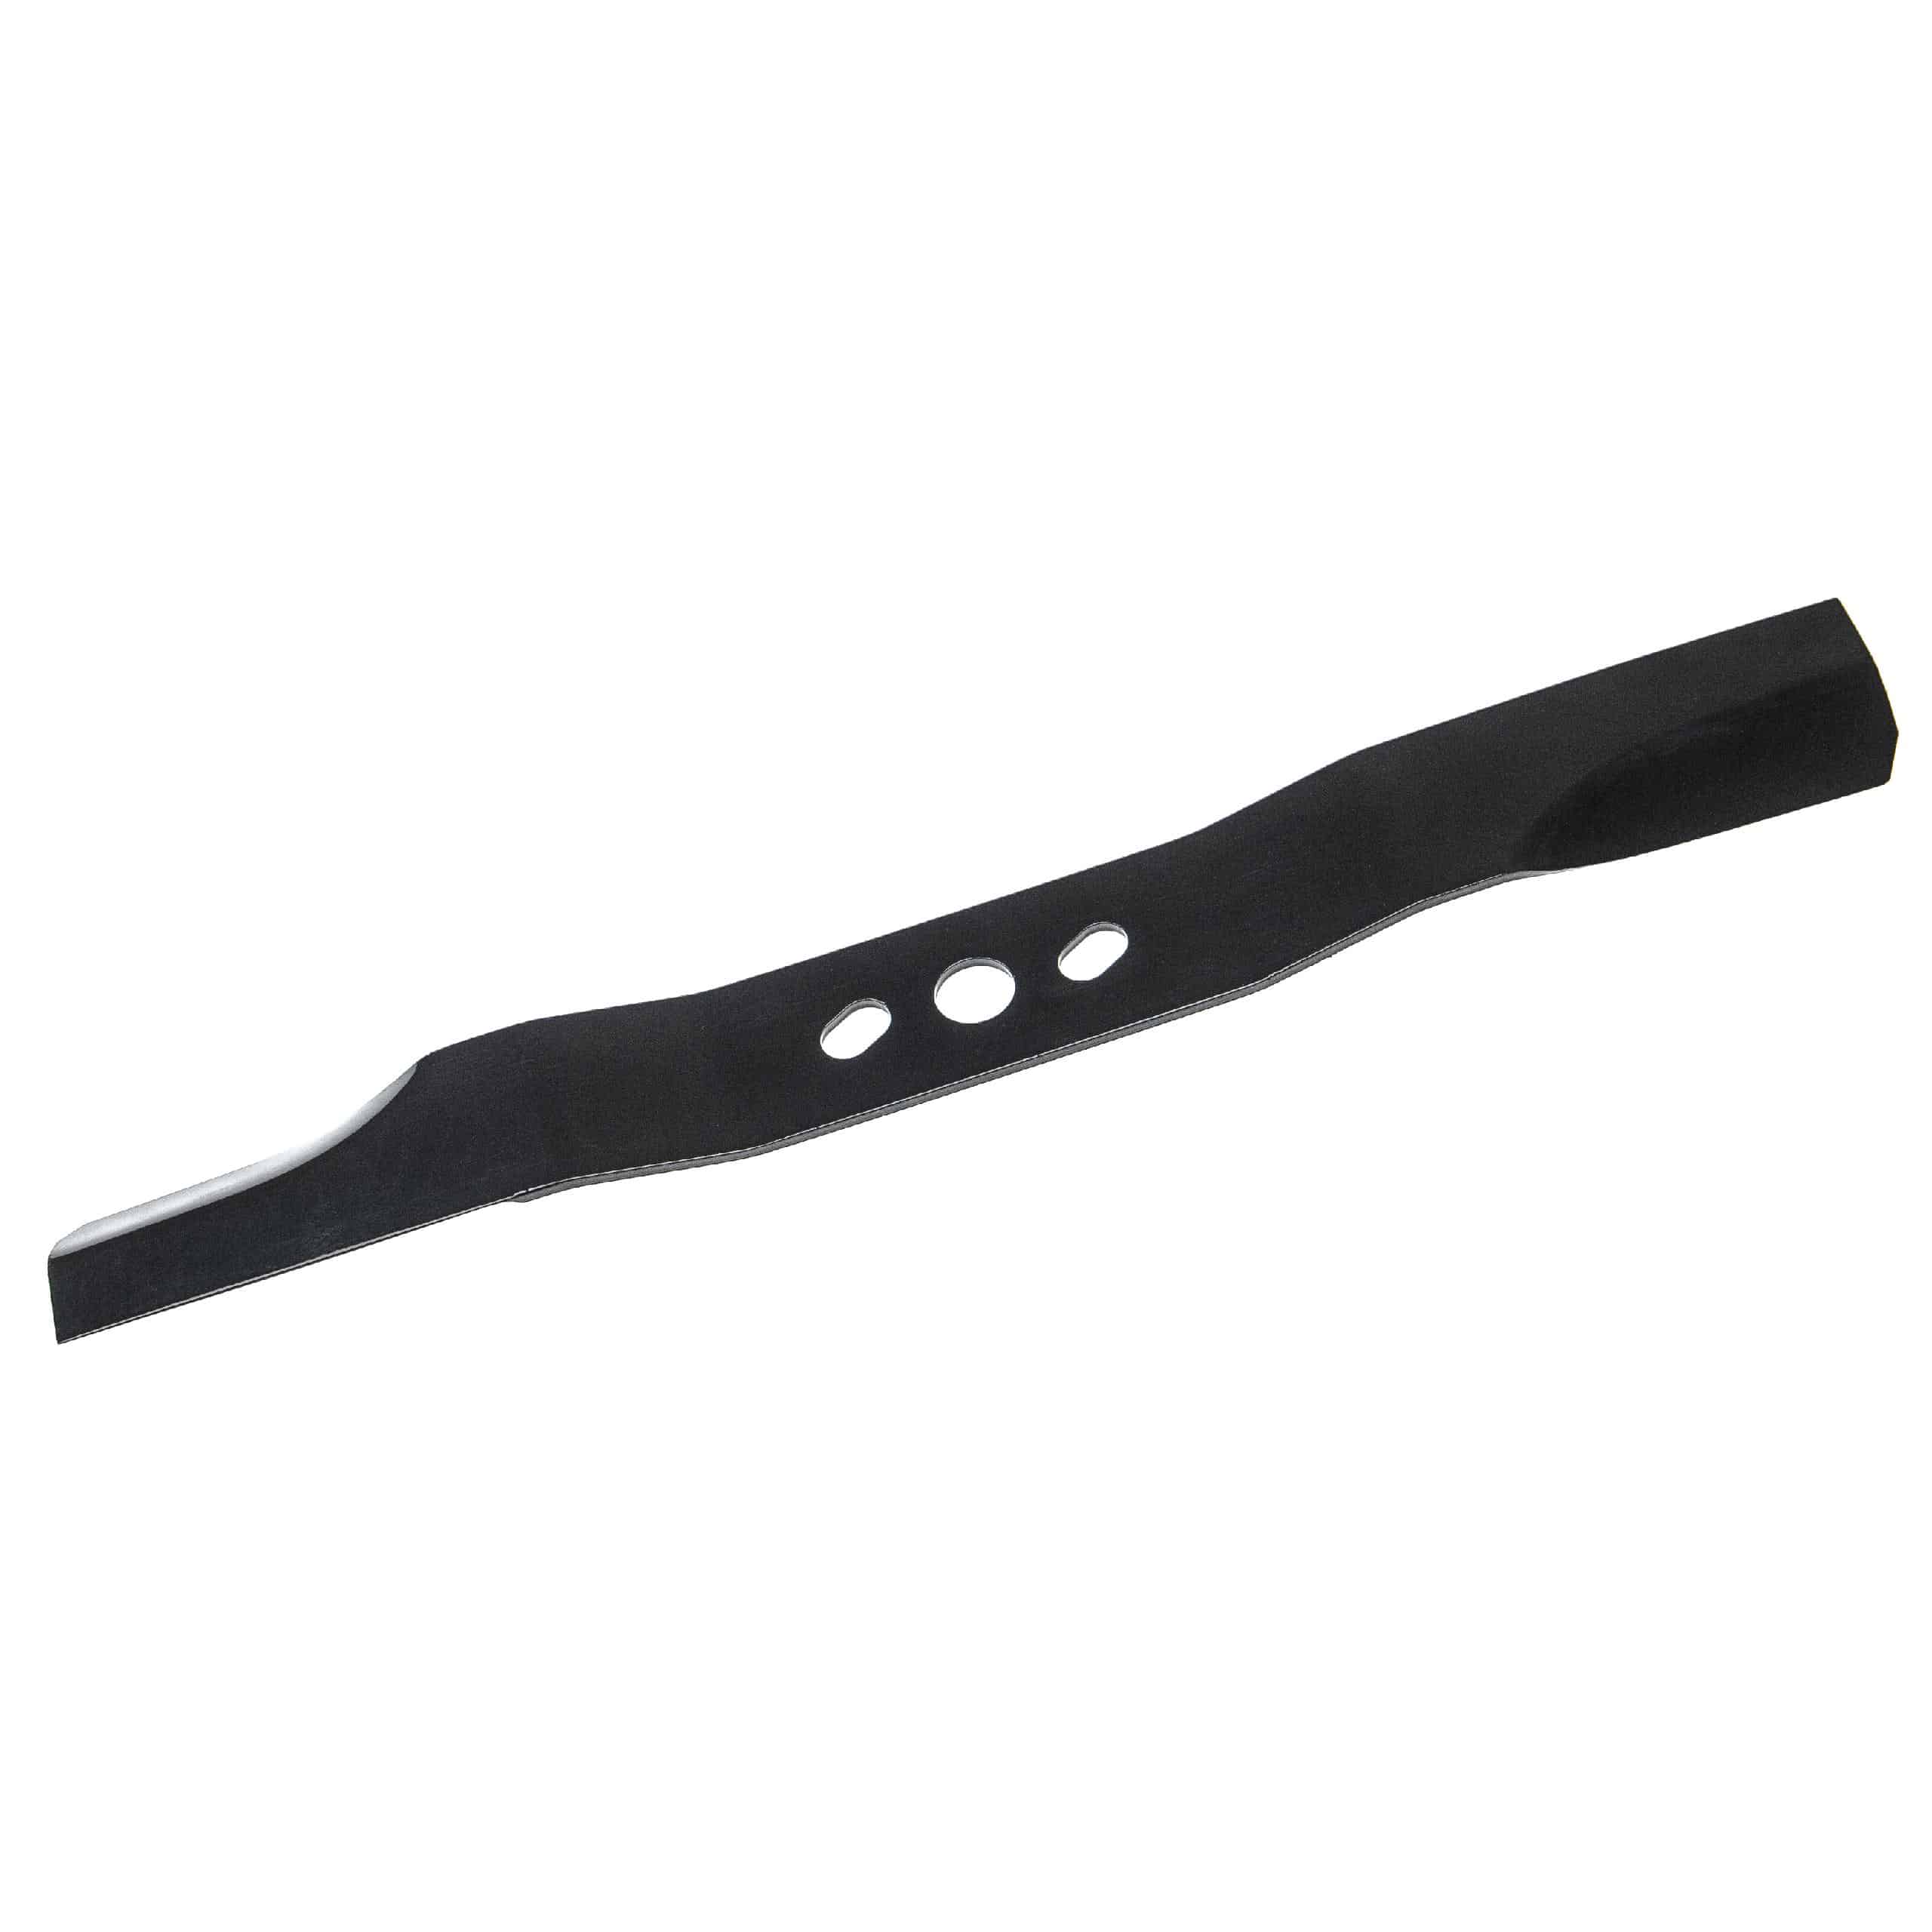 Exchange Blade replaces Brast 45/46cm blade for Cordless Lawnmower, black